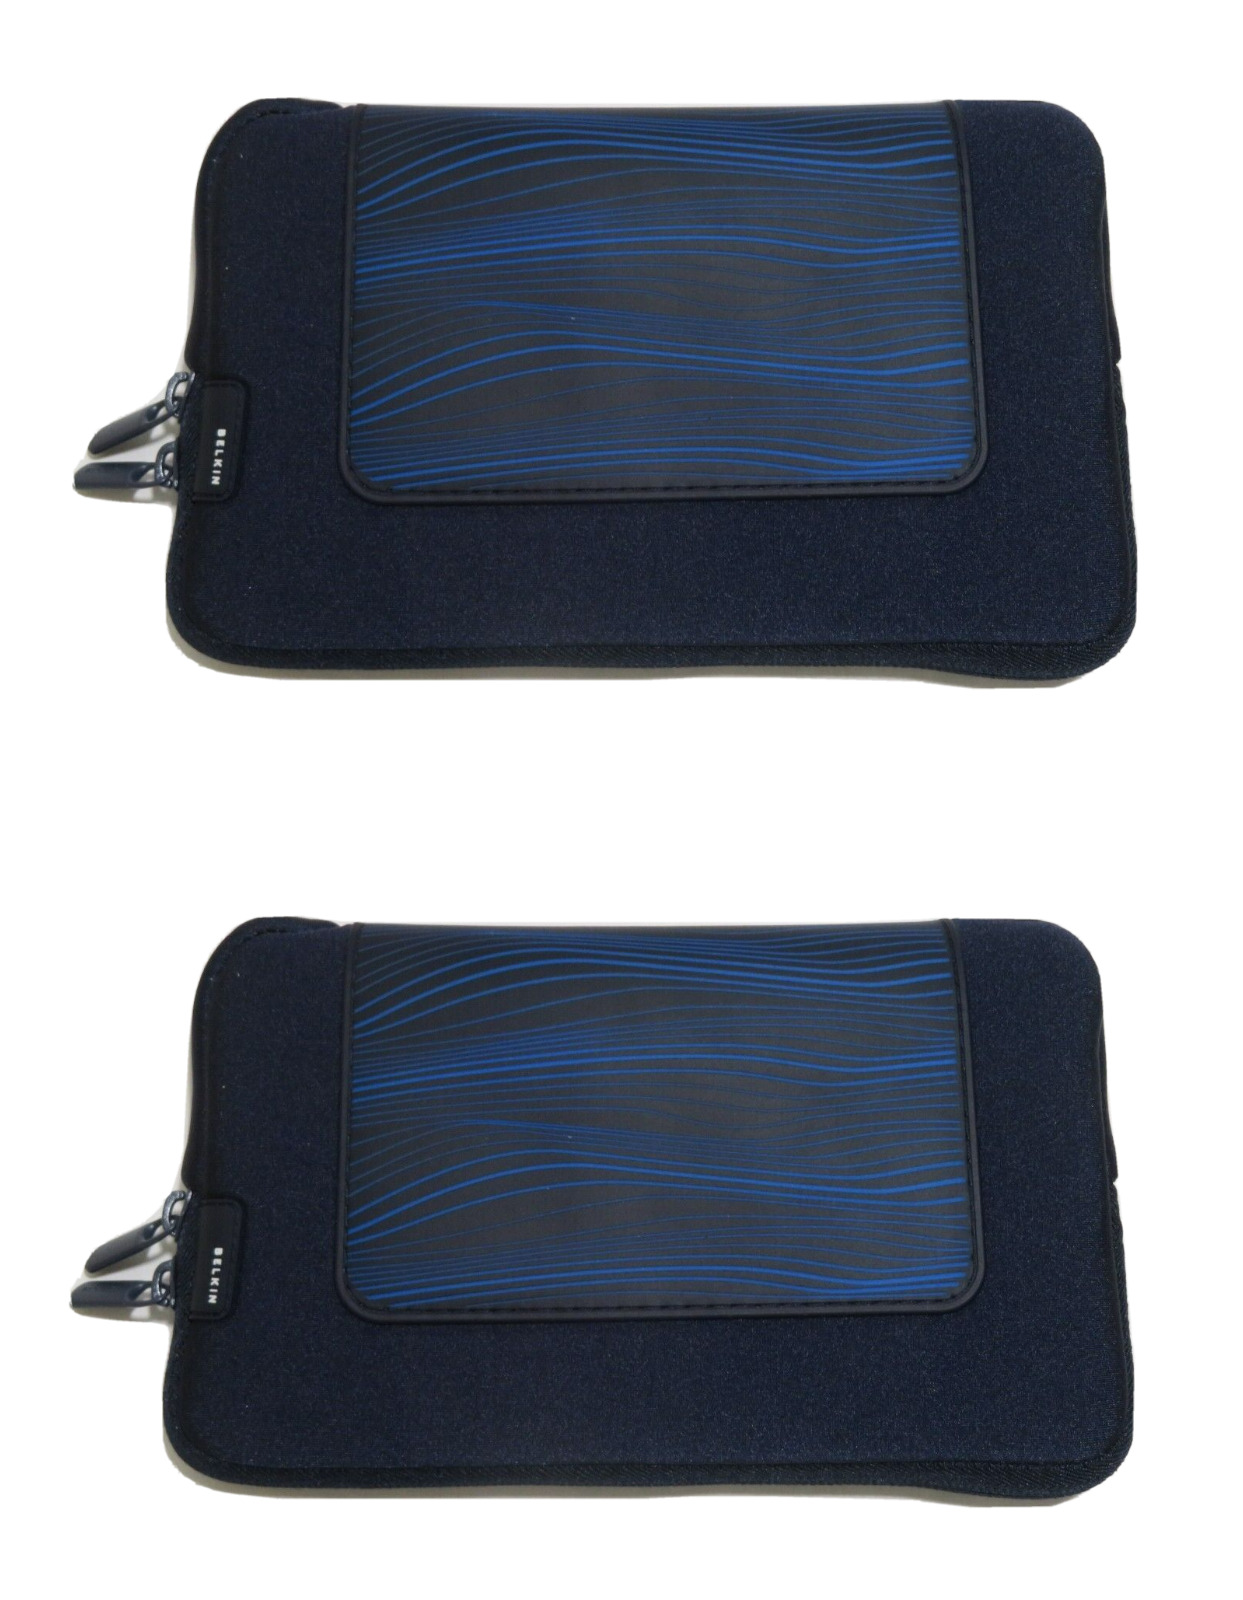 2 LOT Belkin F8N518-190 e-book Protective Reader Sleeve case Blue 8.25